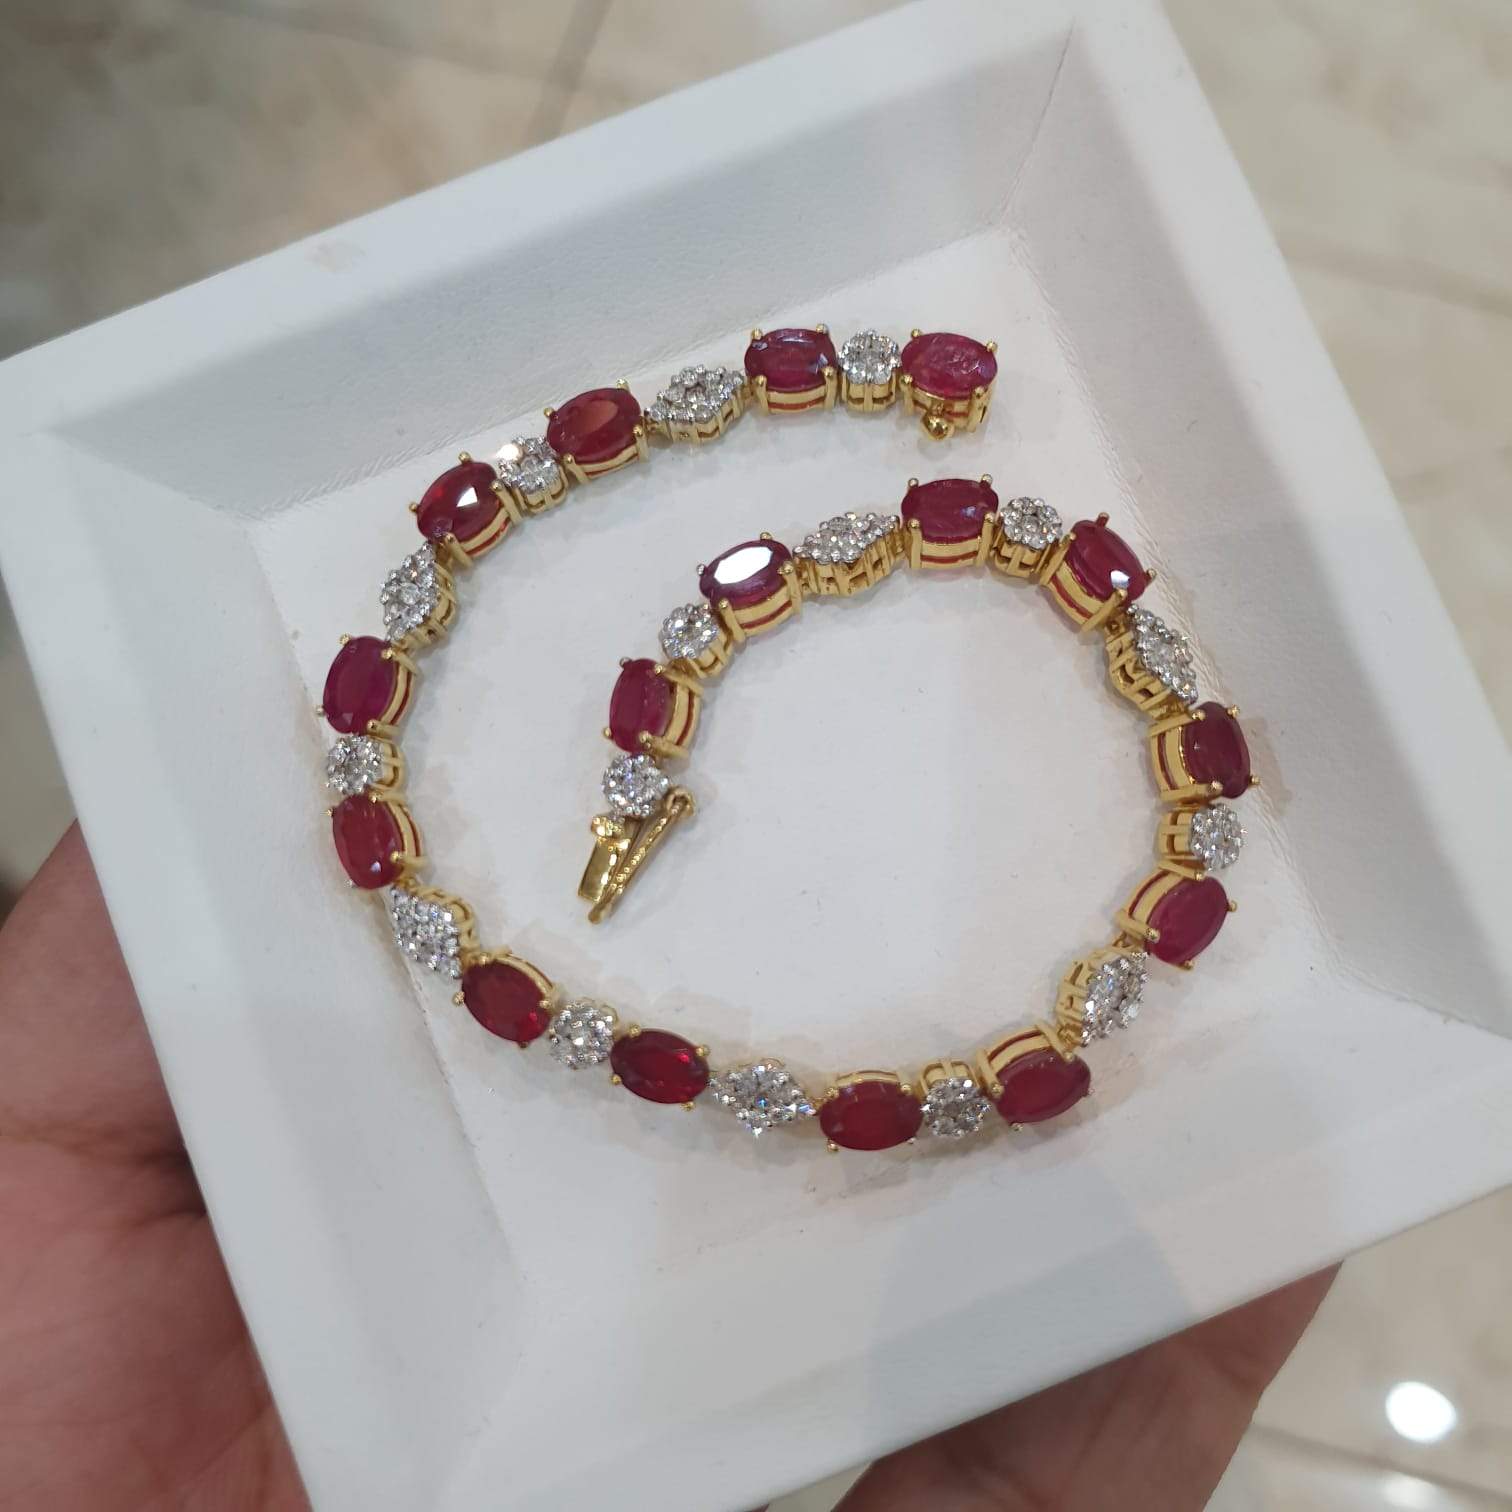 Ruby Bracelet with Diamonds set on 14KT Solid Gold - The LabradoriteKing